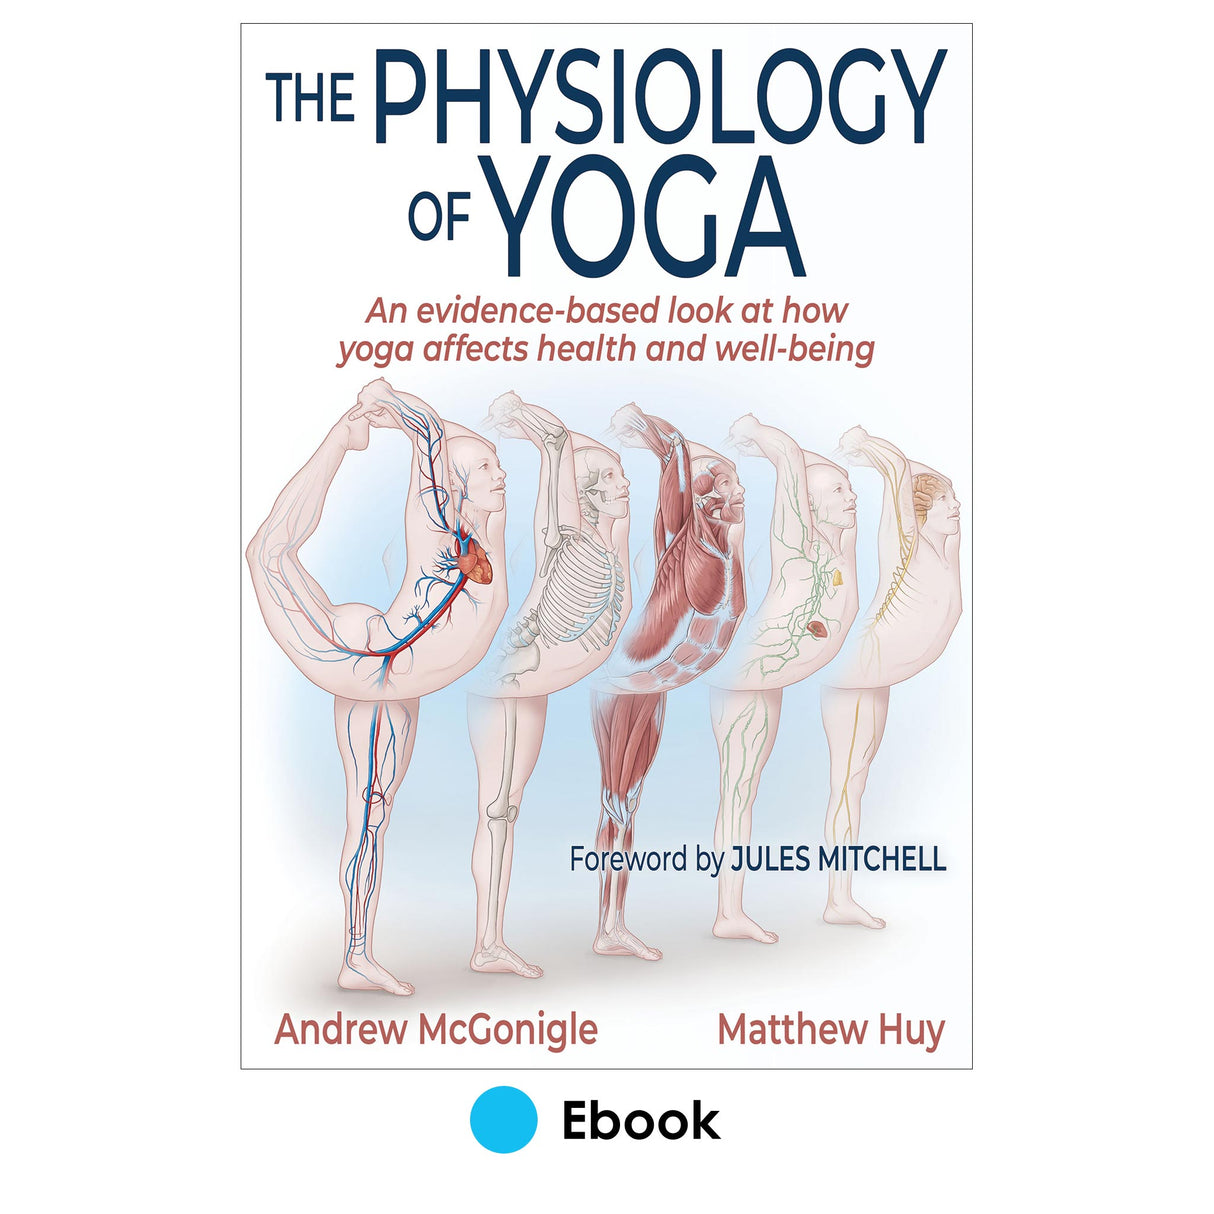 Physiology of Yoga epub, The